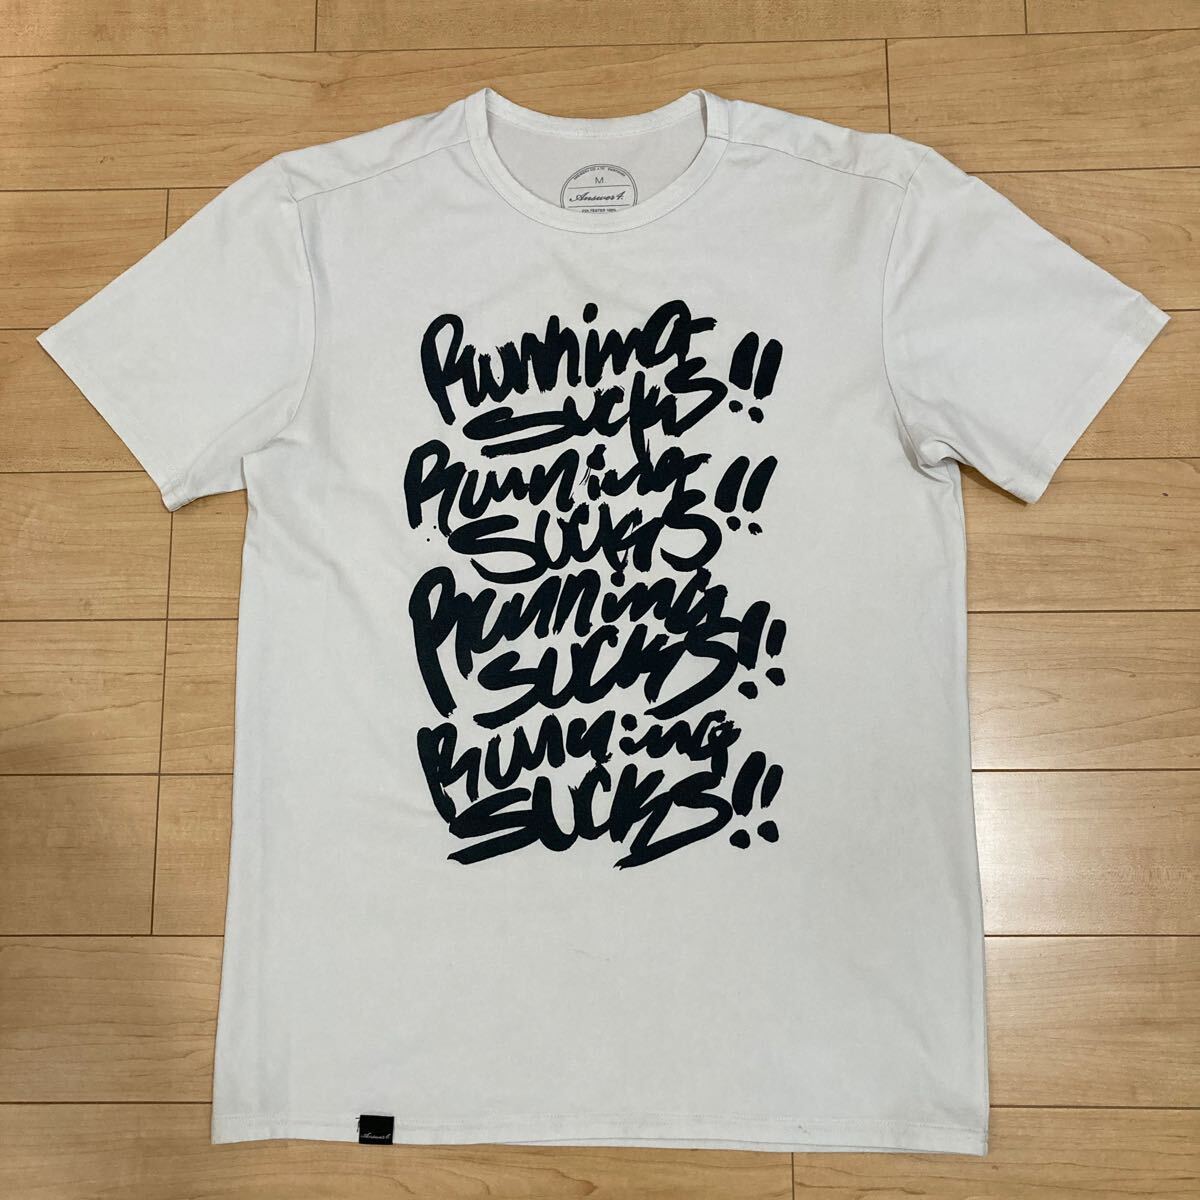 ANSER4 T-shirt running sucks! m size アンサー4 ティーシャツ ランニング サックス! m サイズの画像1